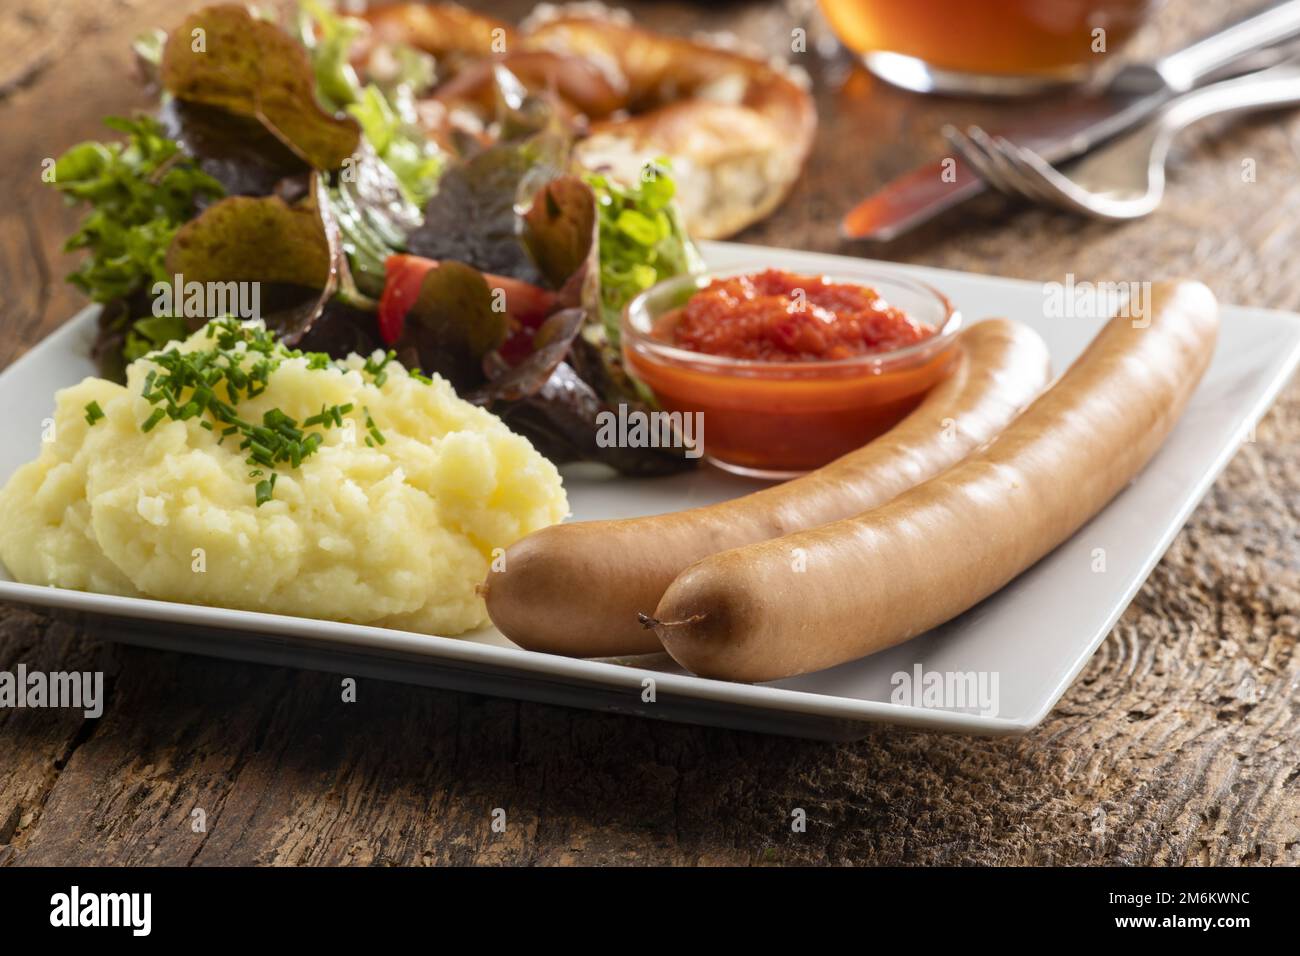 Frankfurter with salad and mashed potatoes Stock Photo